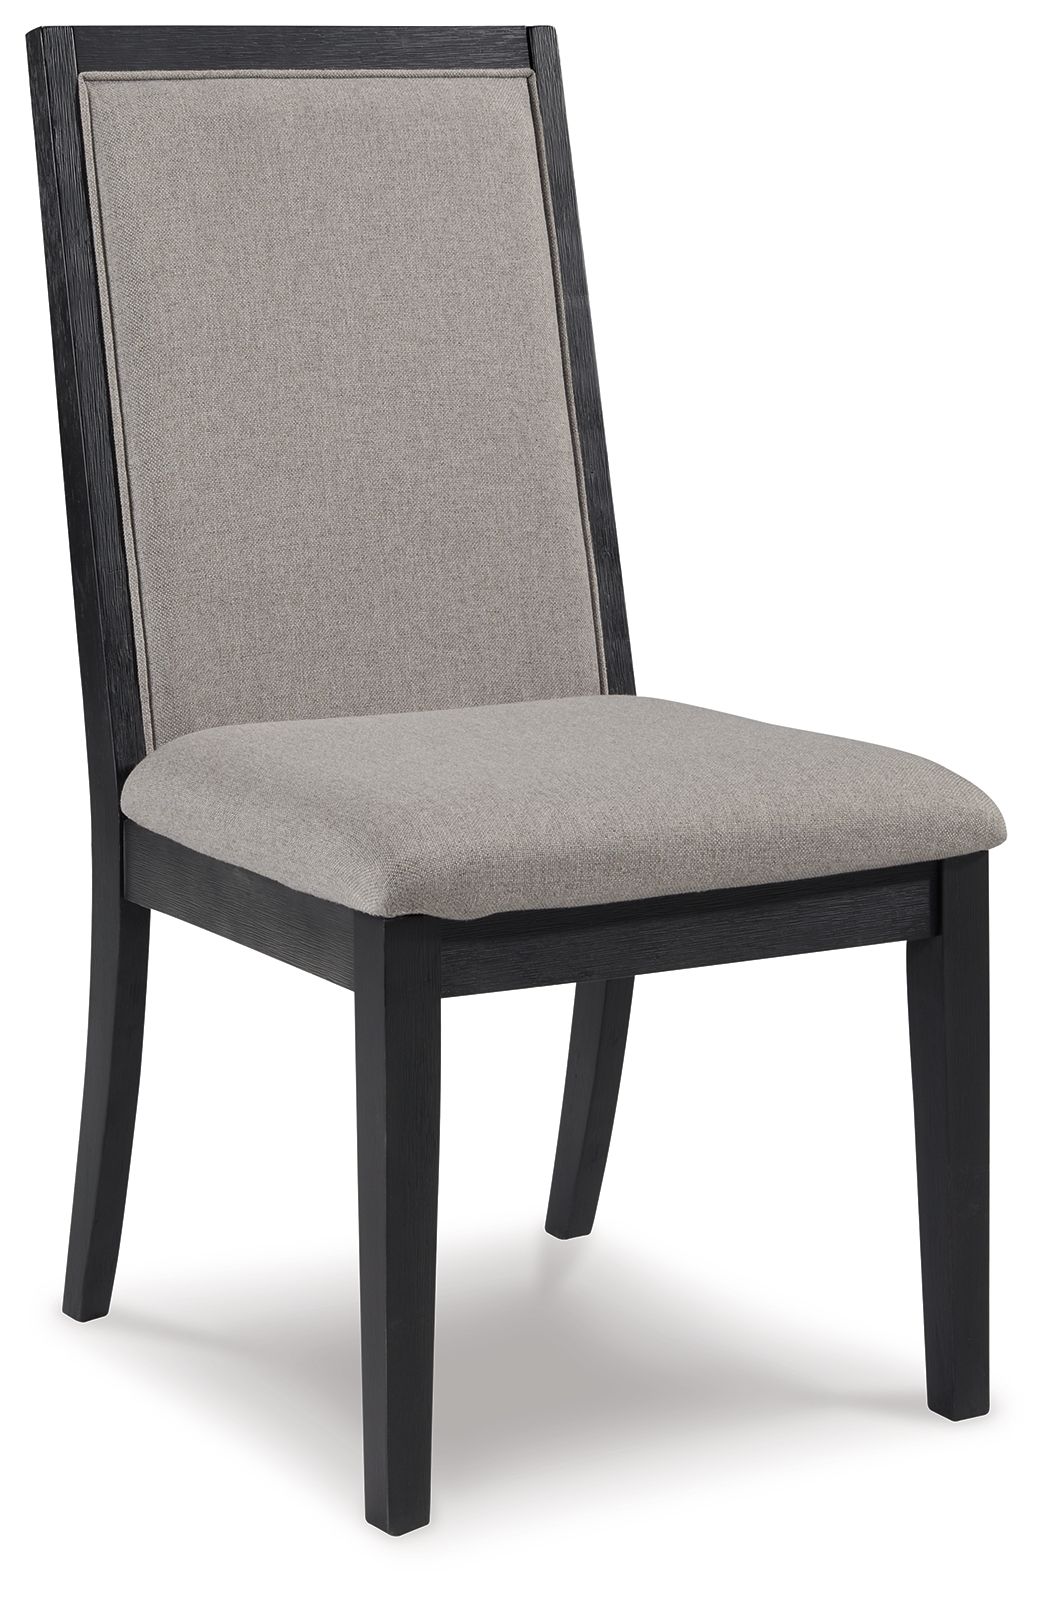 Foyland - Light Gray / Black - Dining Uph Side Chair (Set of 2) - Tony's Home Furnishings